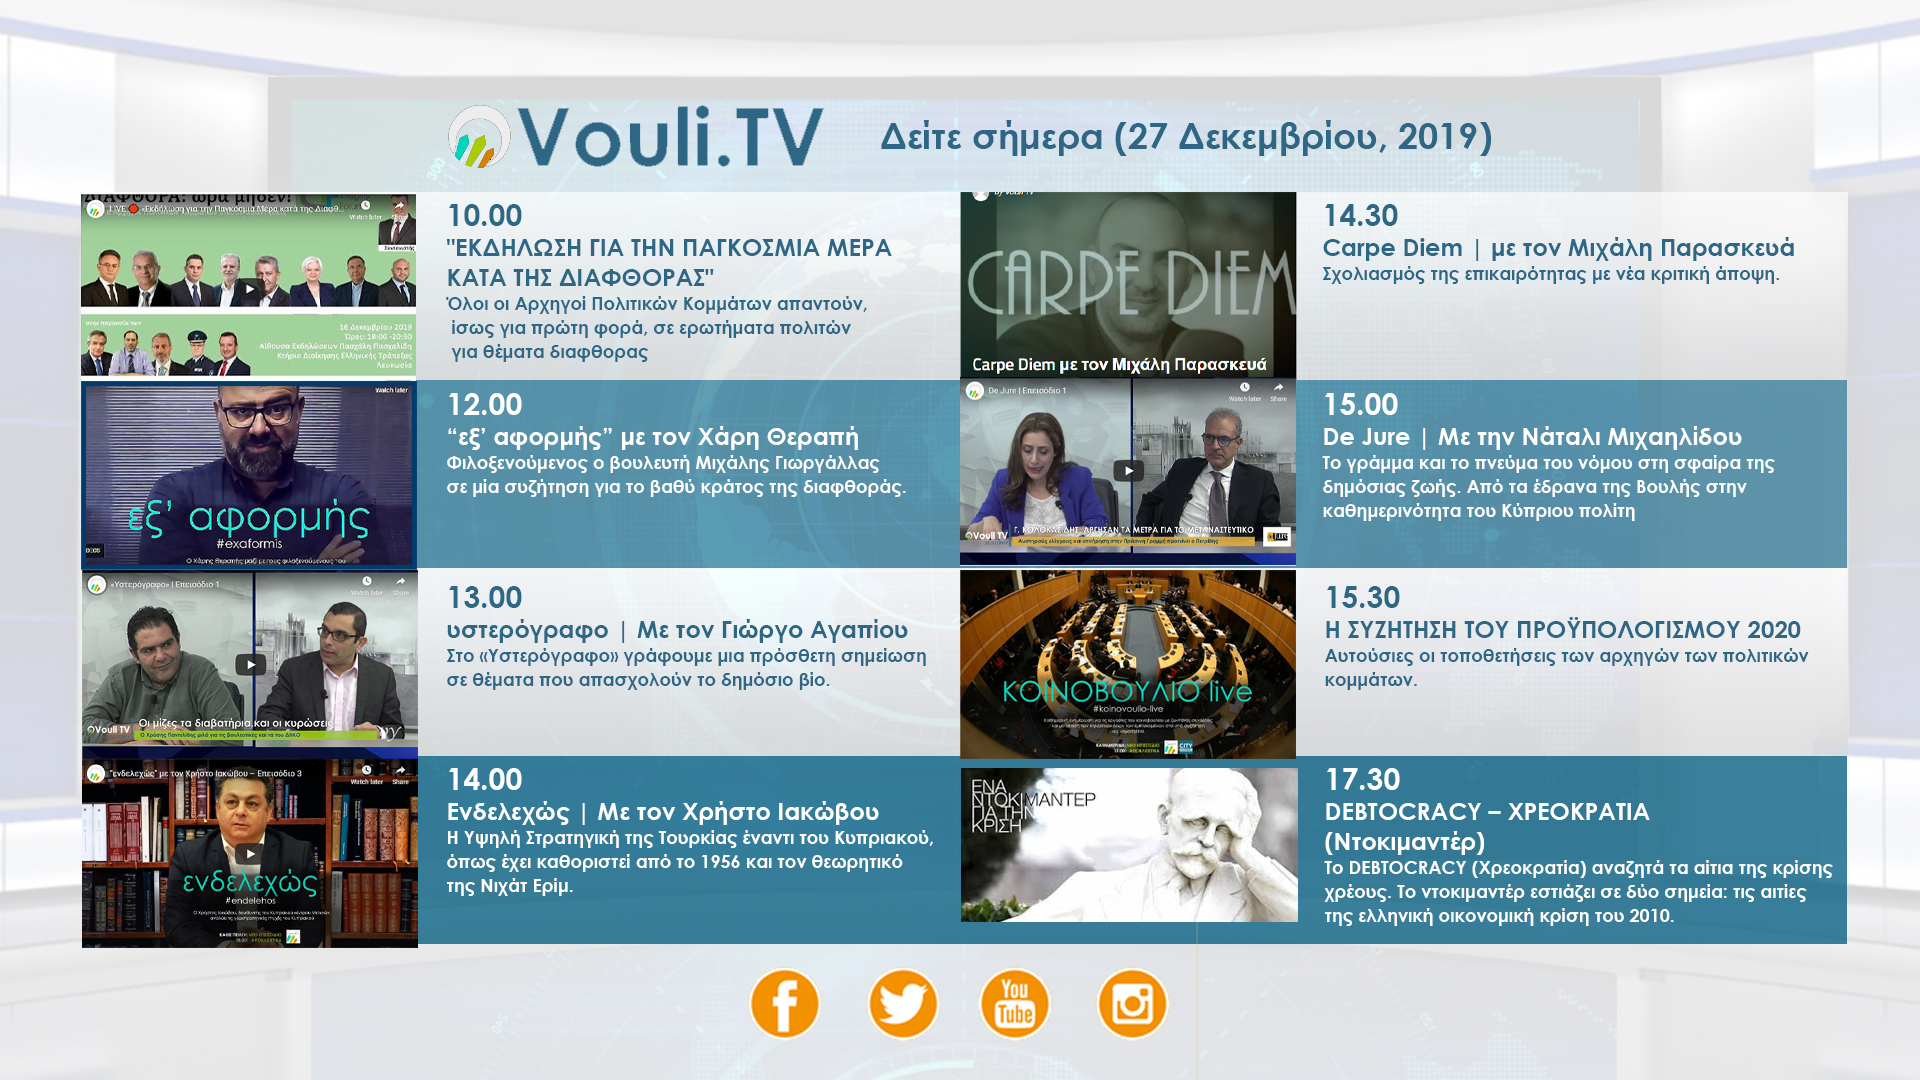 VOULI TV | ΔΕΙΤΕ ΣΗΜΕΡΑ 27/12/2019